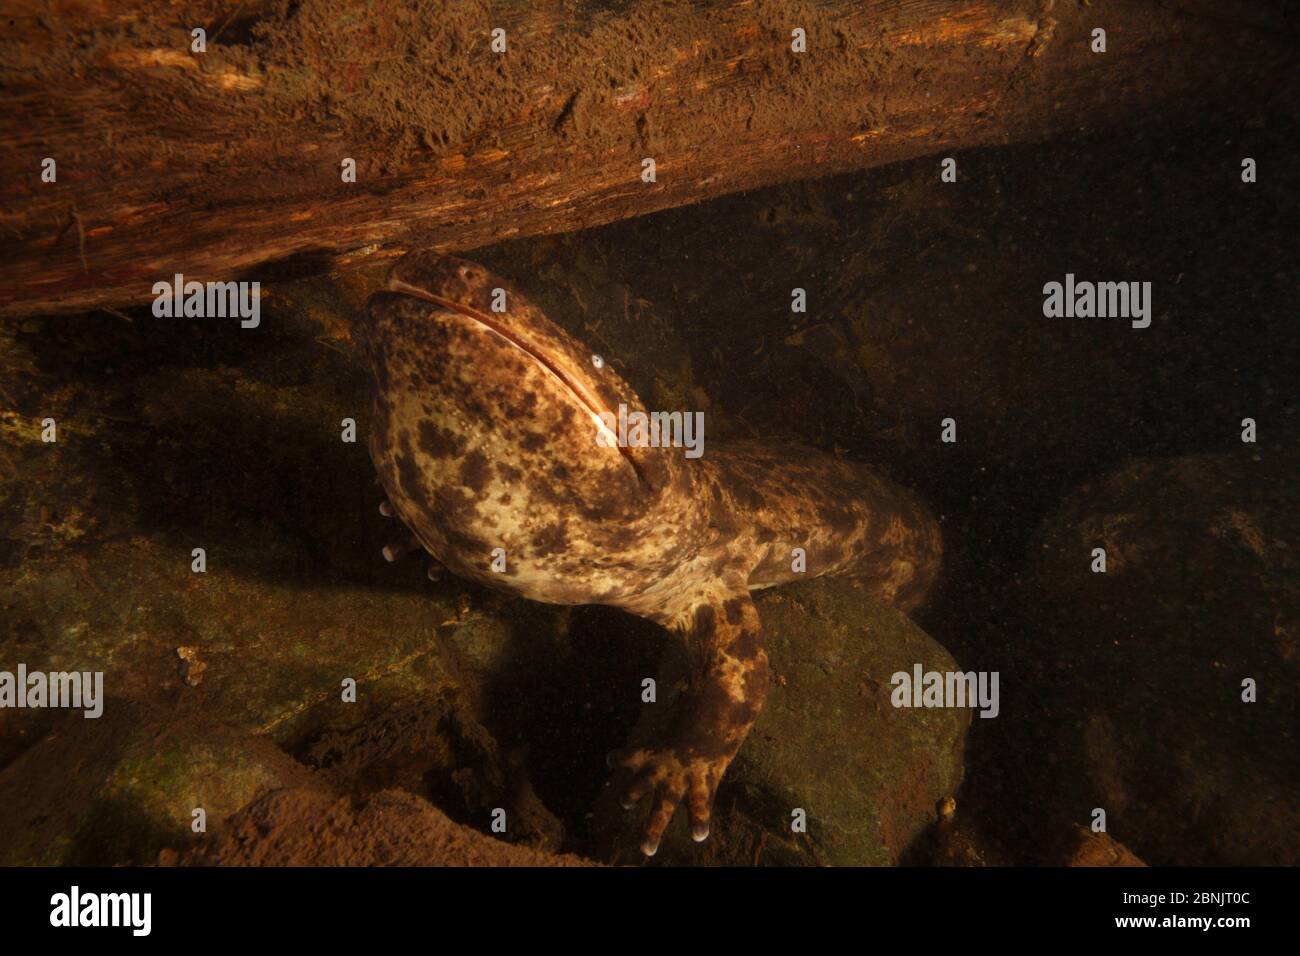 Japanese giant salamander (Andrias japonicus) Honshu, Japan. Stock Photo